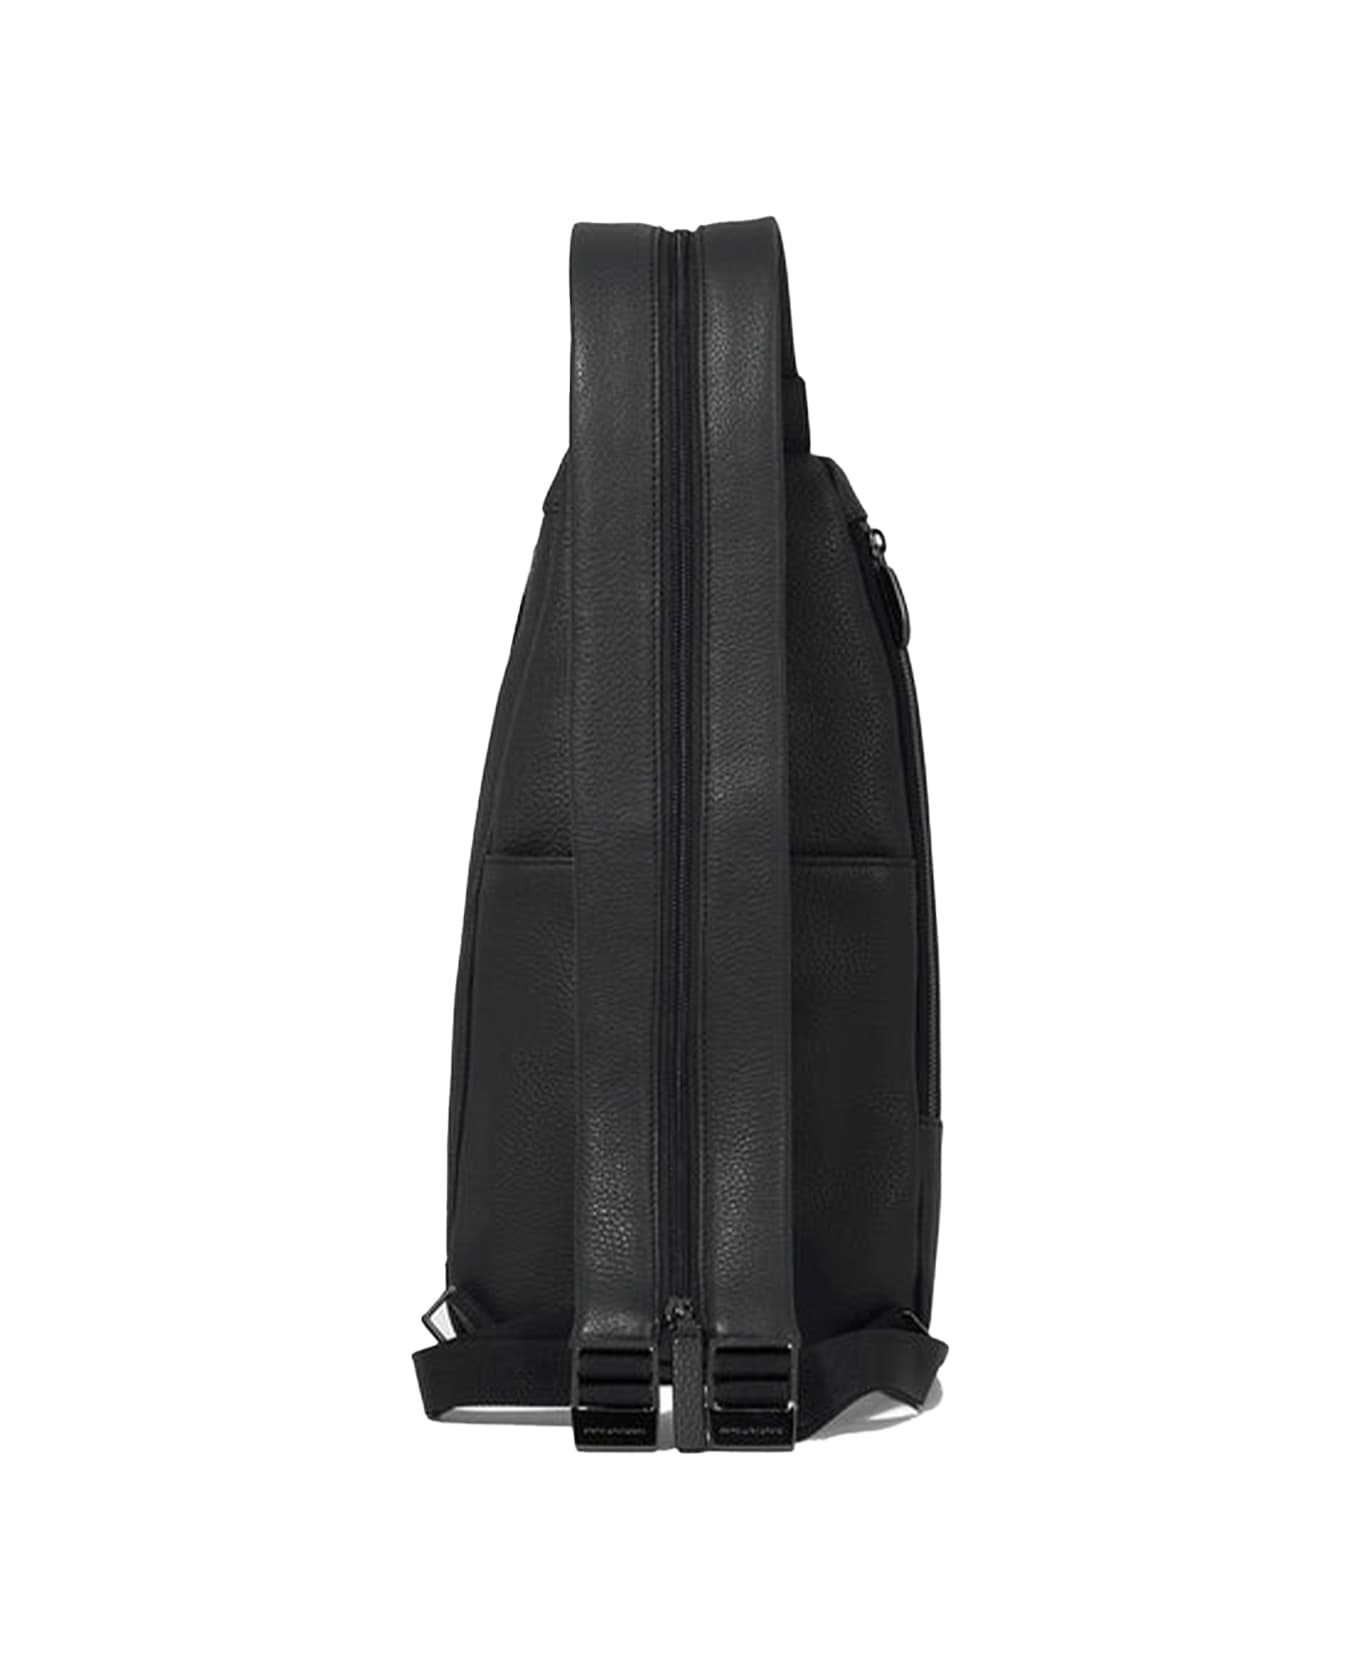 Piquadro Shoulder Bag For Ipad Mini, Portable As A Backpack - NERO